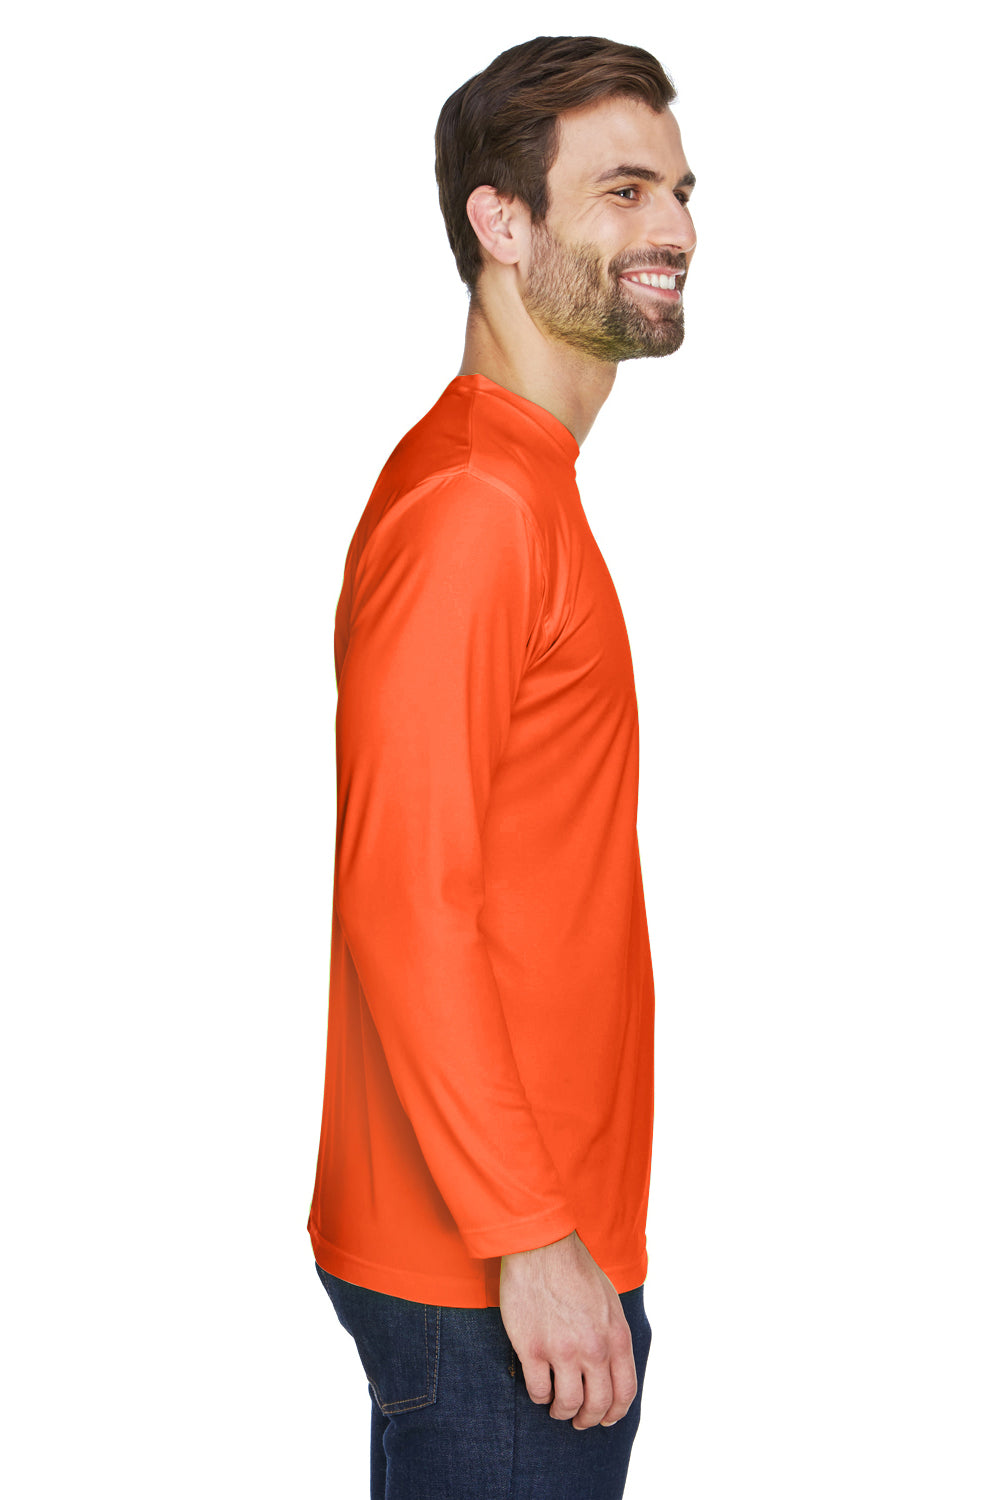 UltraClub 8422 Mens Cool & Dry Performance Moisture Wicking Long Sleeve Crewneck T-Shirt Bright Orange Side